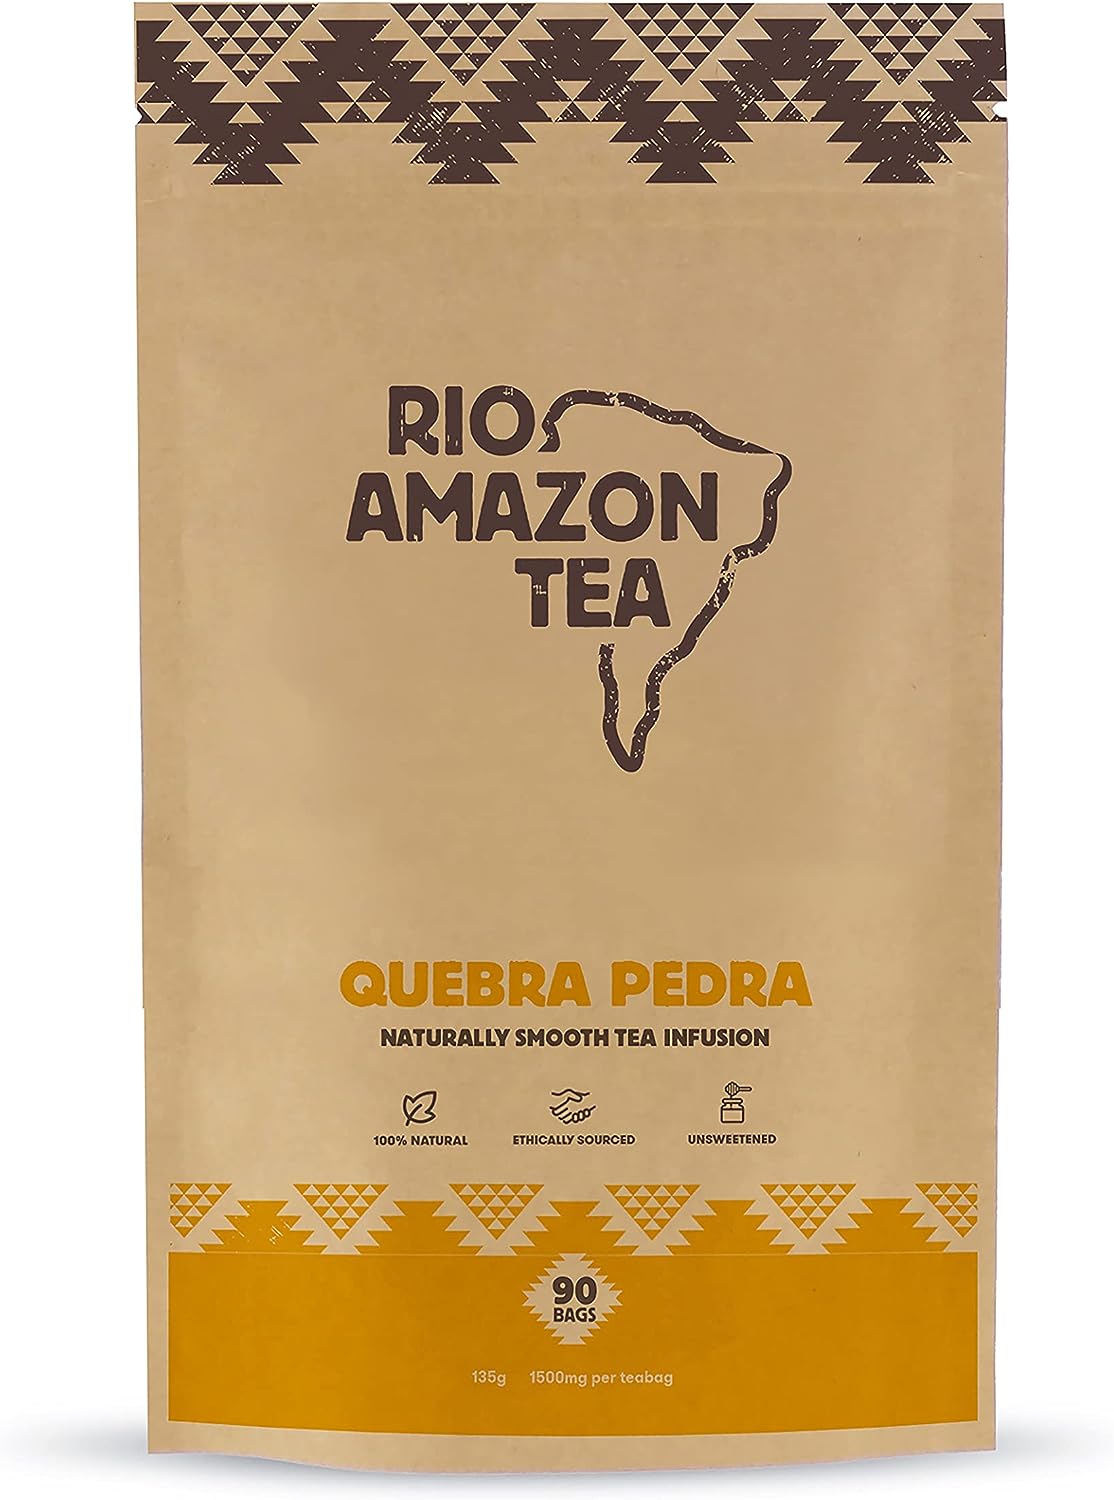 Rio Amazon Quebra Pedra (Chanca Piedra) 90 Teabags